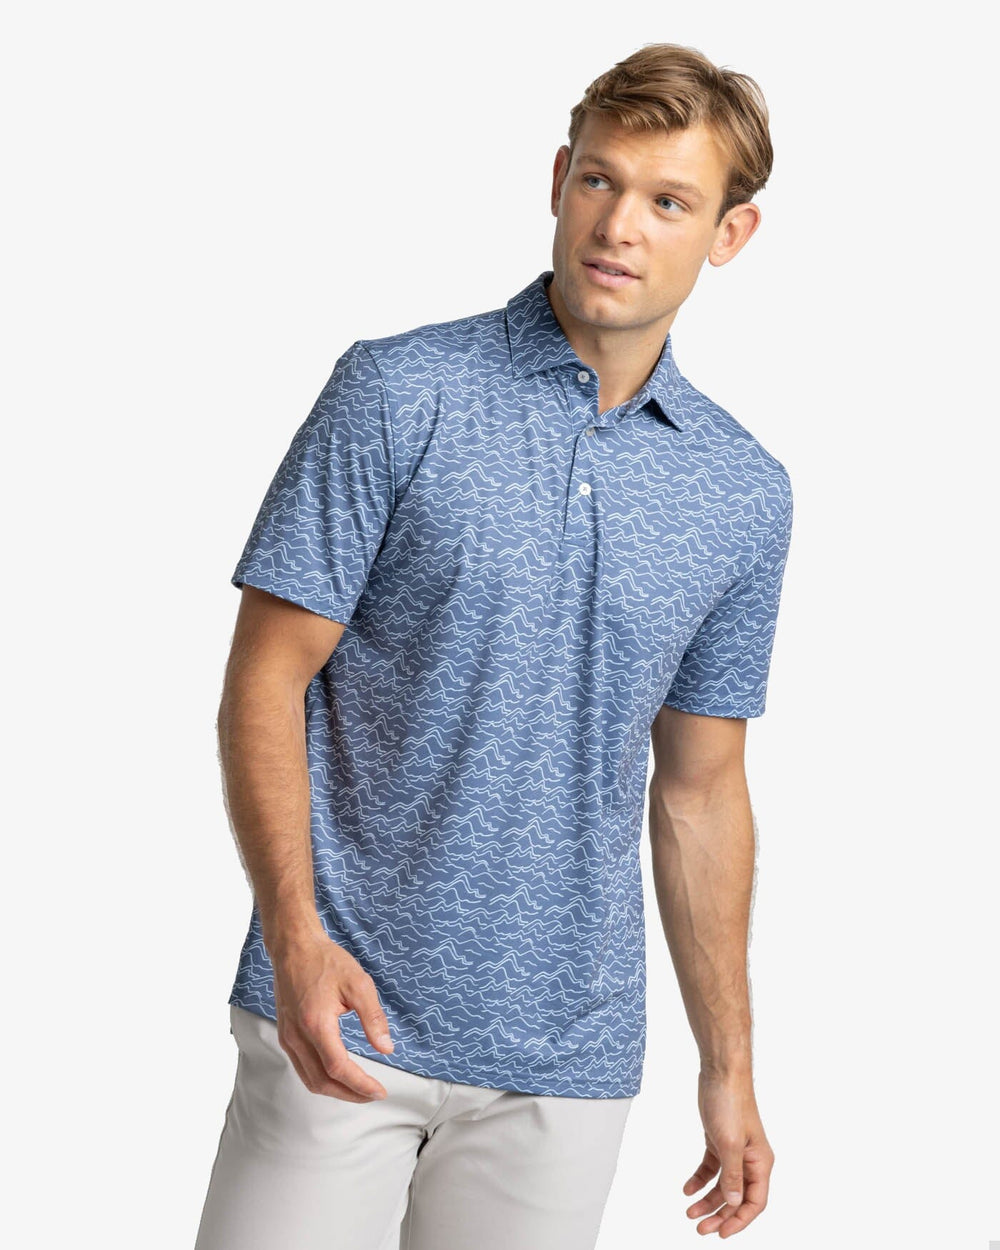 Southern Tide Skipjack Short Sleeve Polo Shirt, Mens, M, Blue Haze